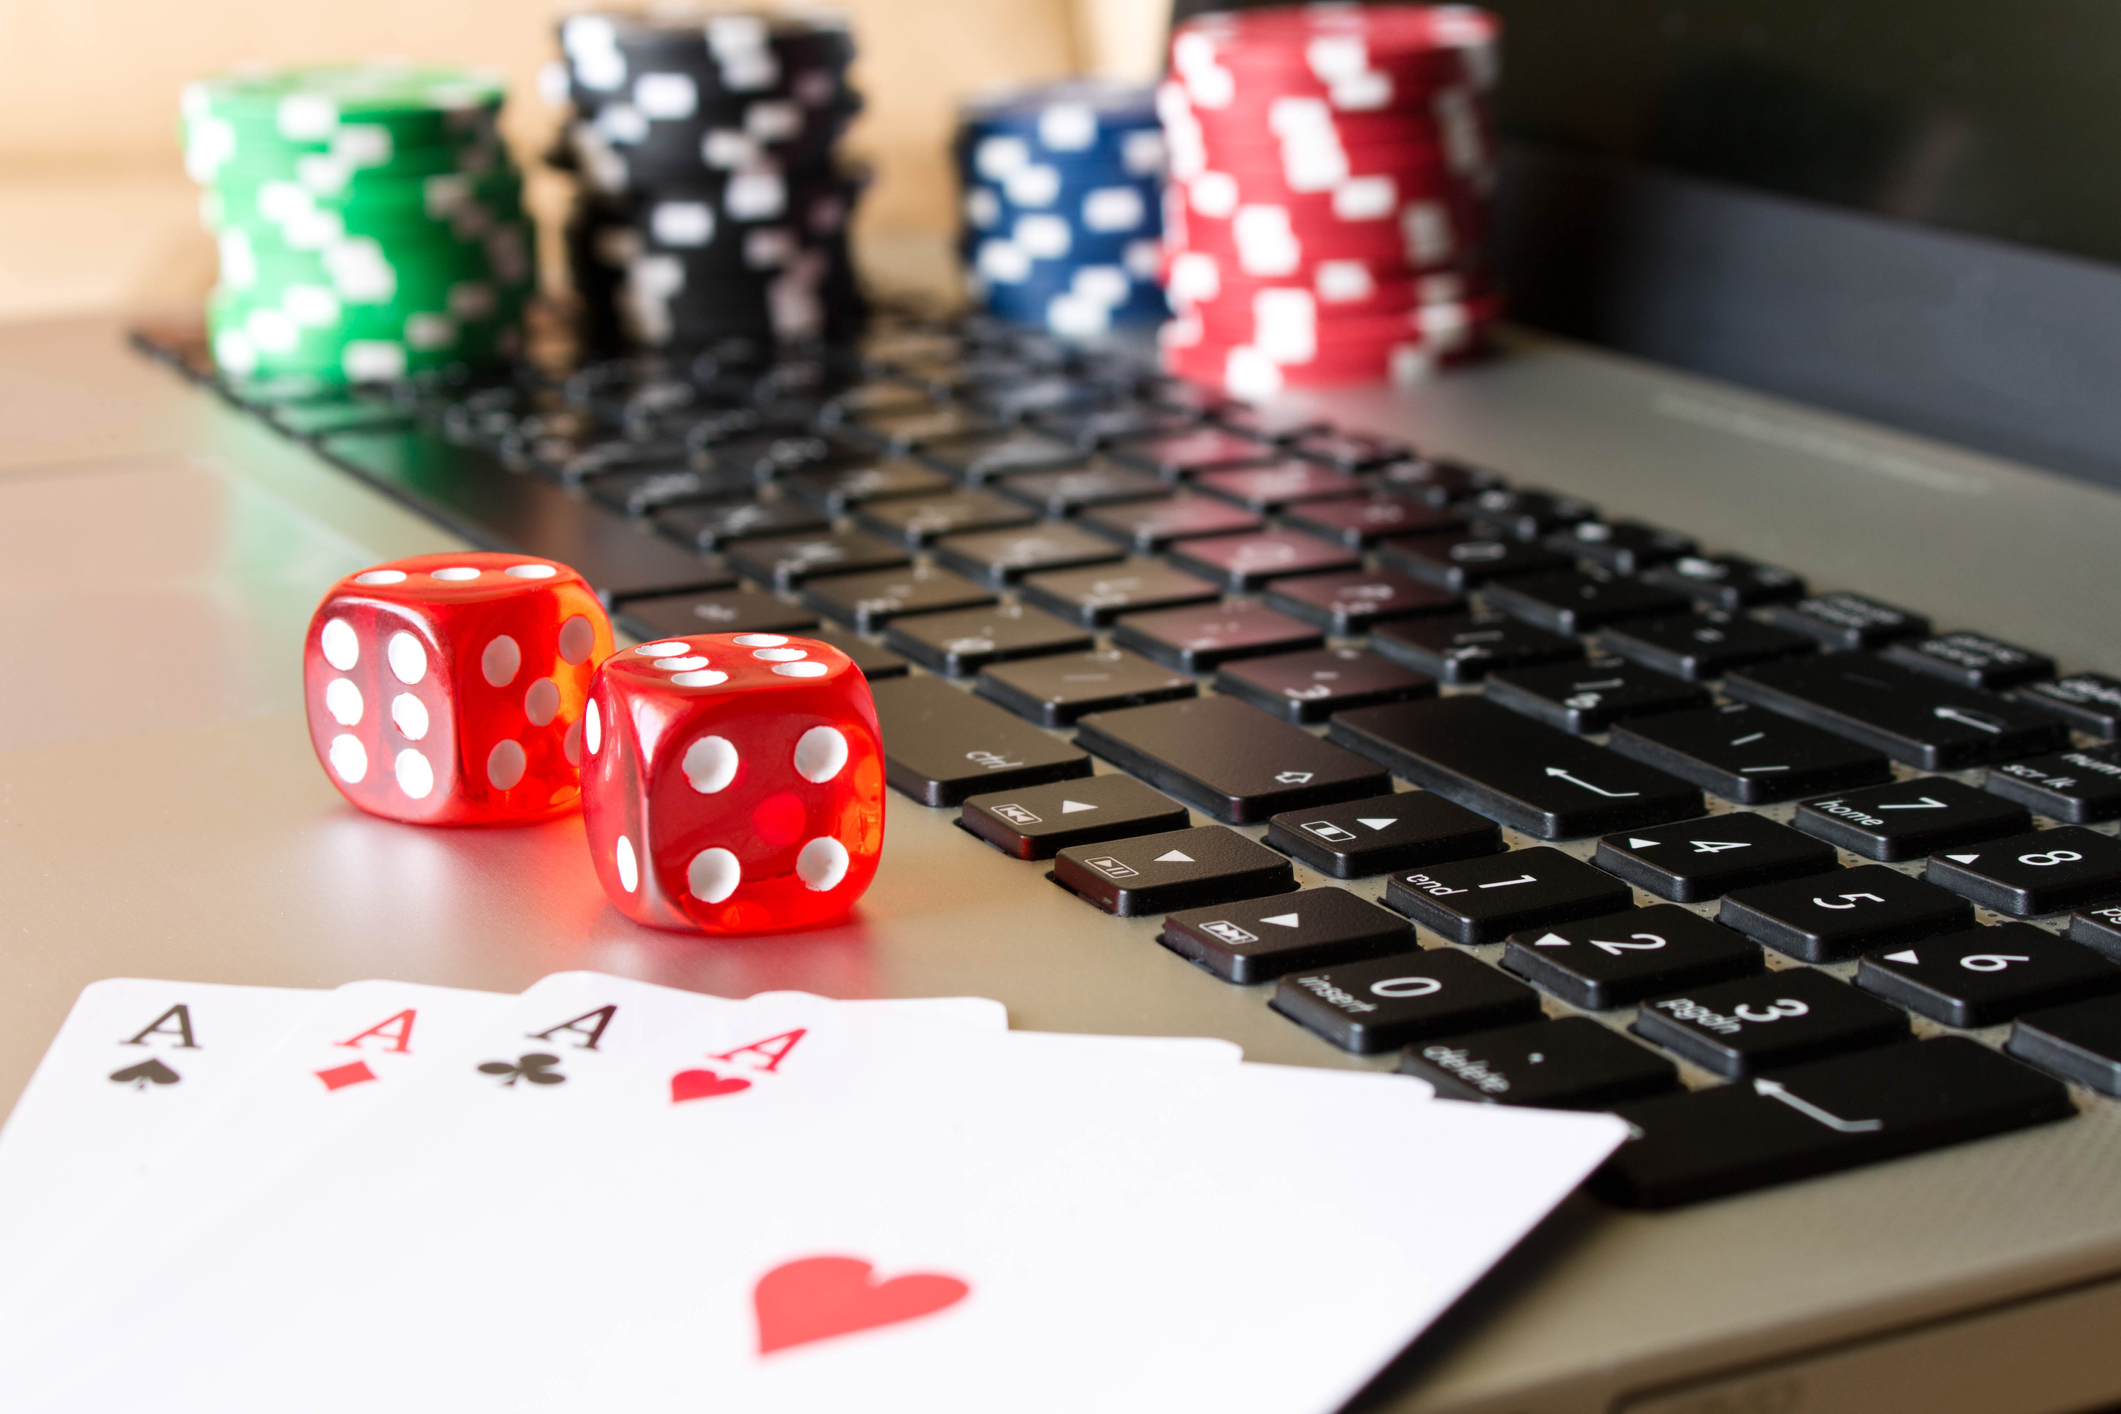 Casino Poker Online